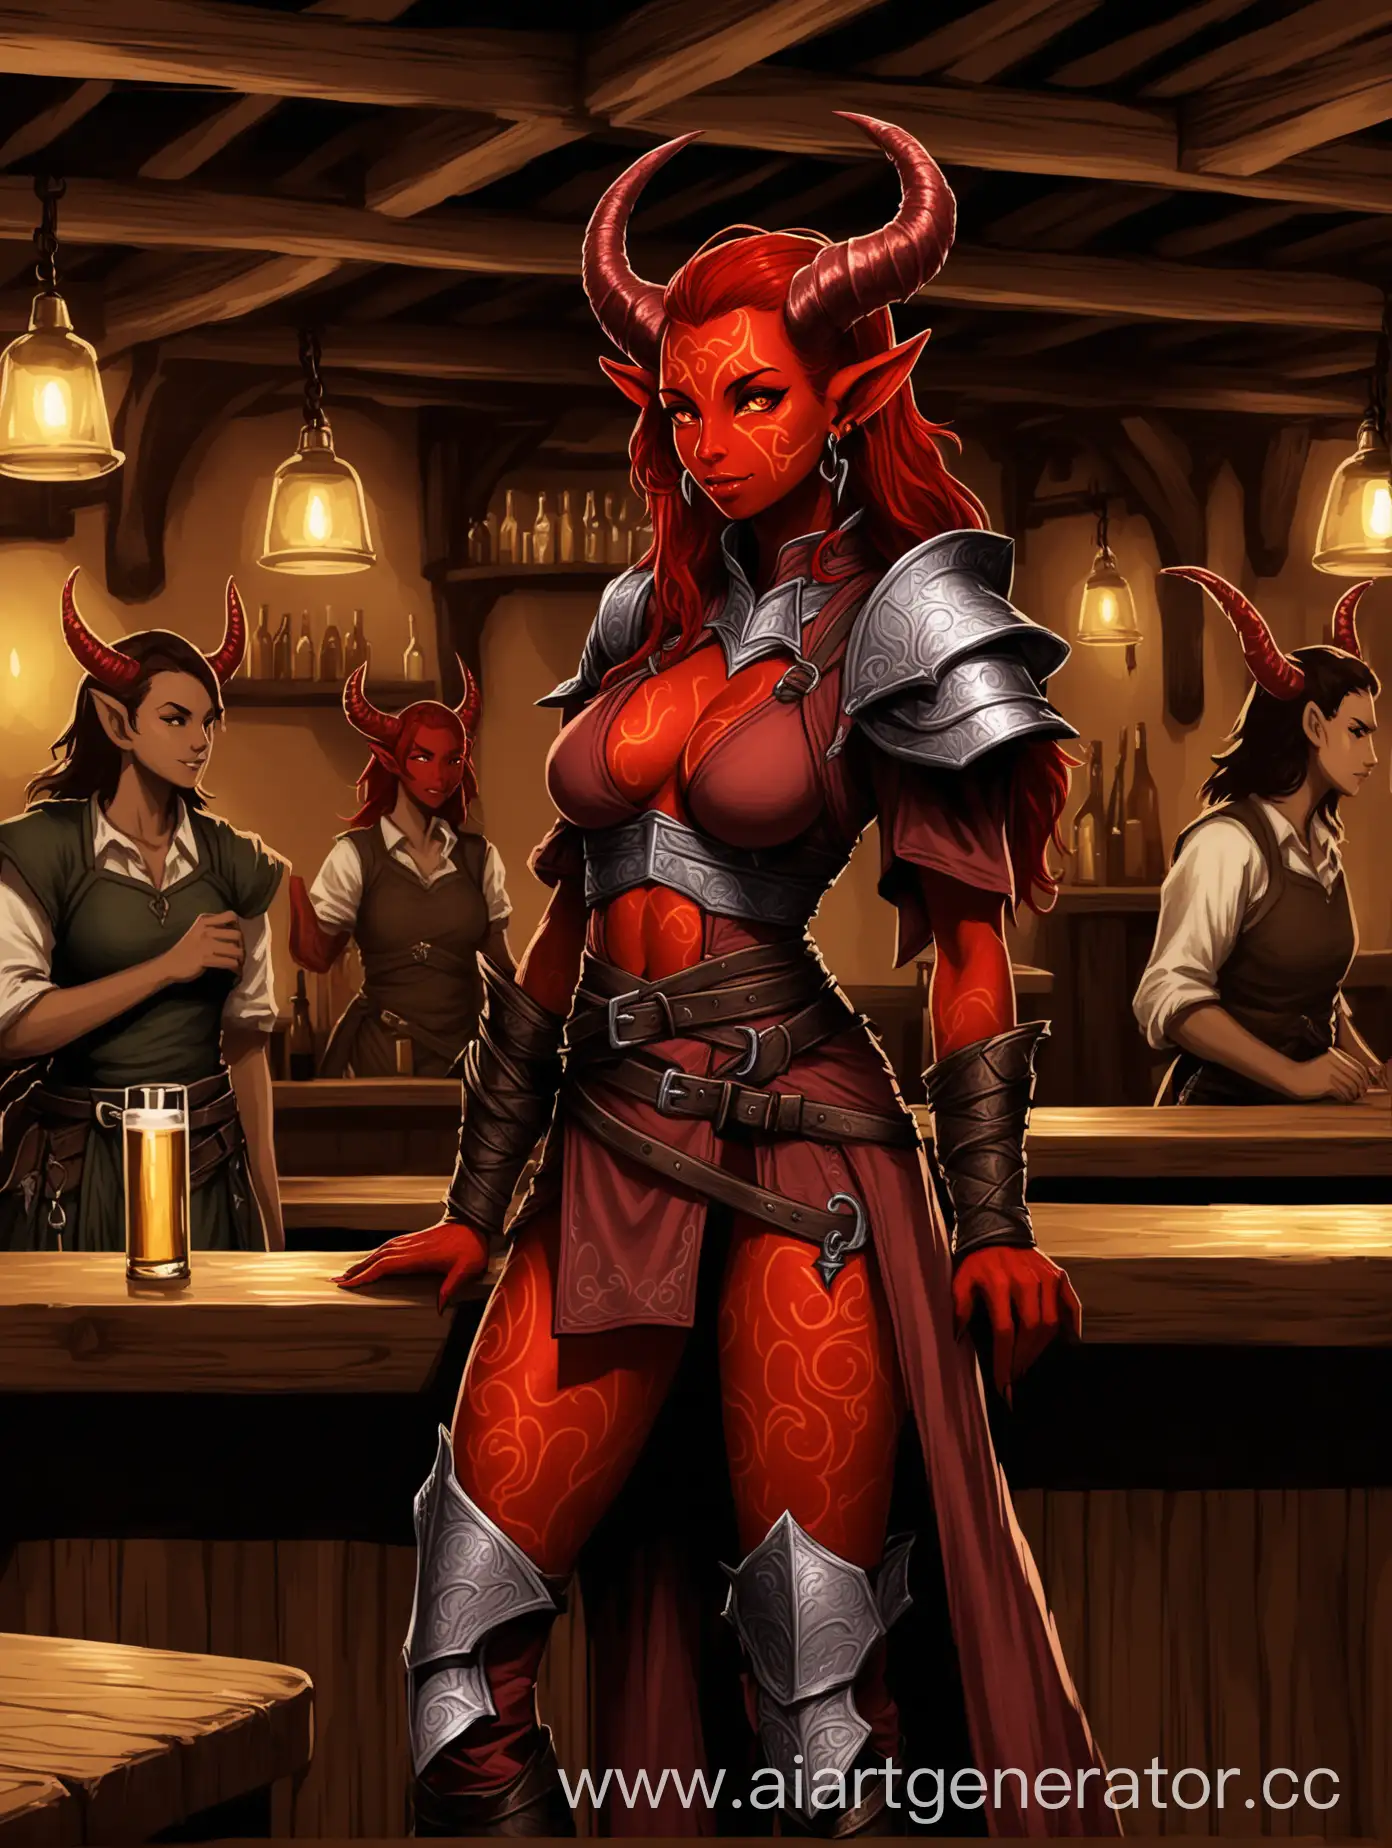 Tall-Red-Tiefling-Female-Warrior-Standing-Sideways-in-Tavern